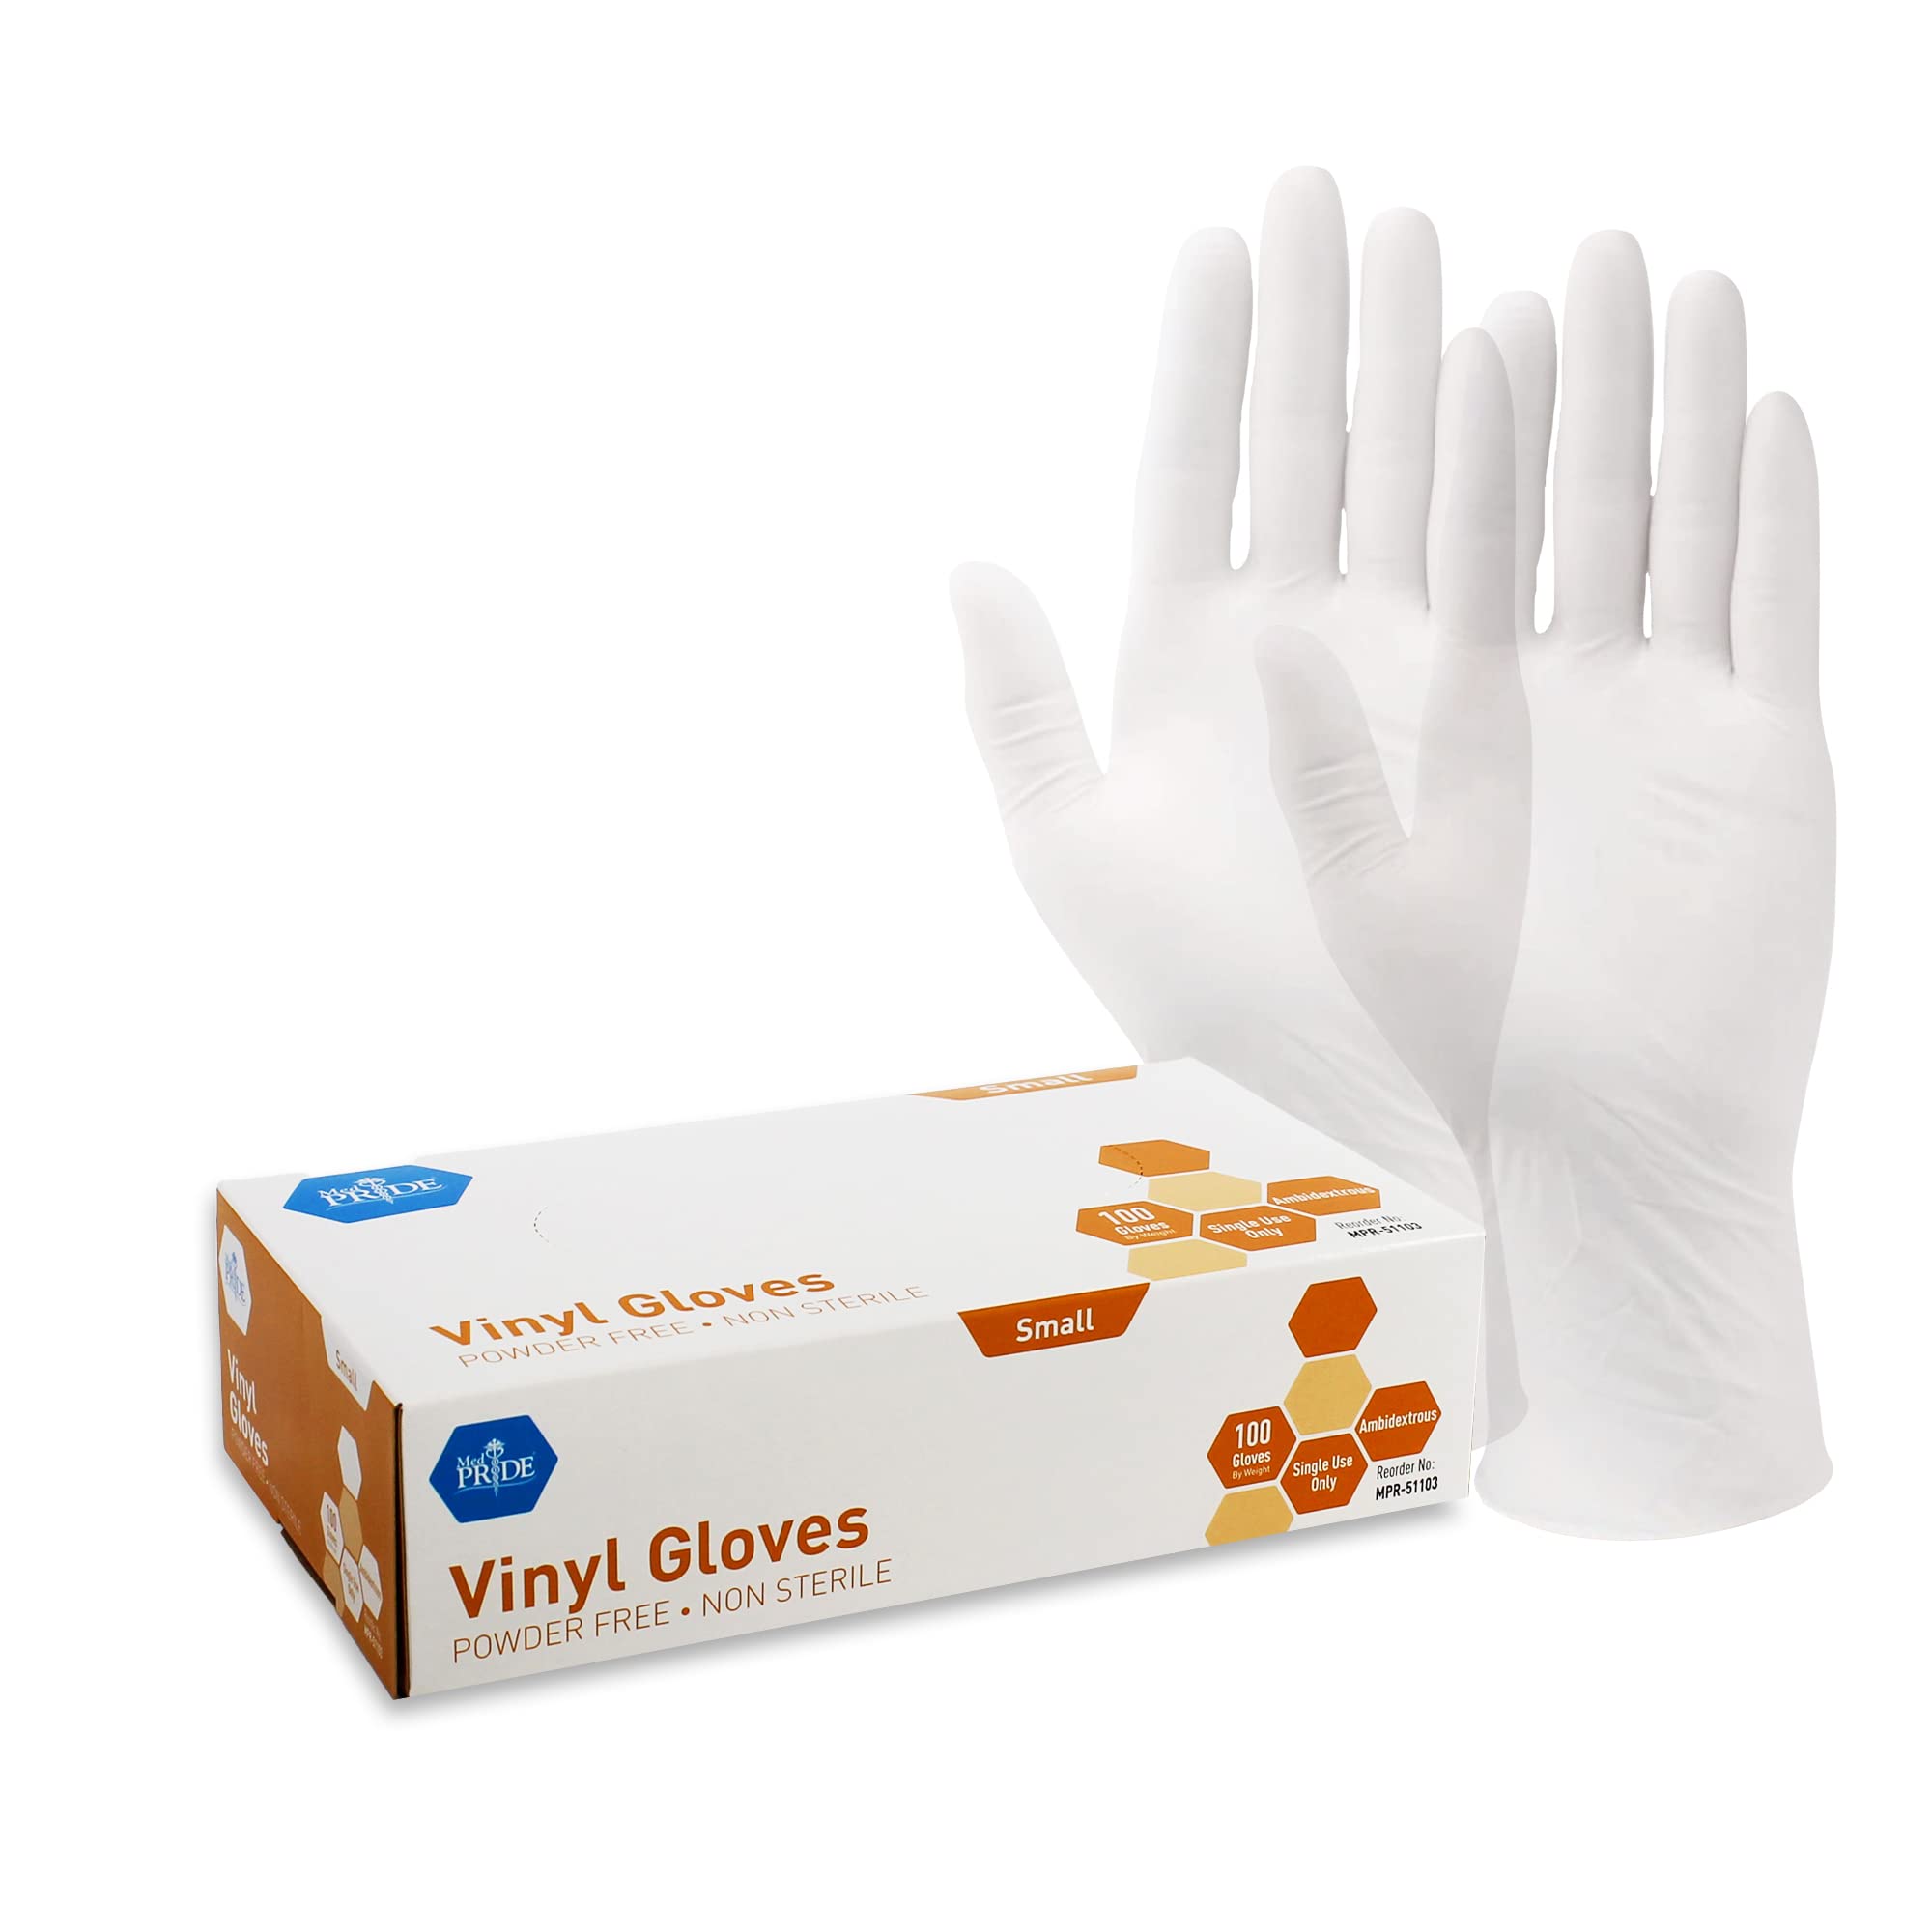 MED PRIDE 乙烯基手套|超大盒 100 个| 430 万厚、无粉、非无菌、重型一次性手套|适用于医疗保健、医疗、食品处理等领域的专业级